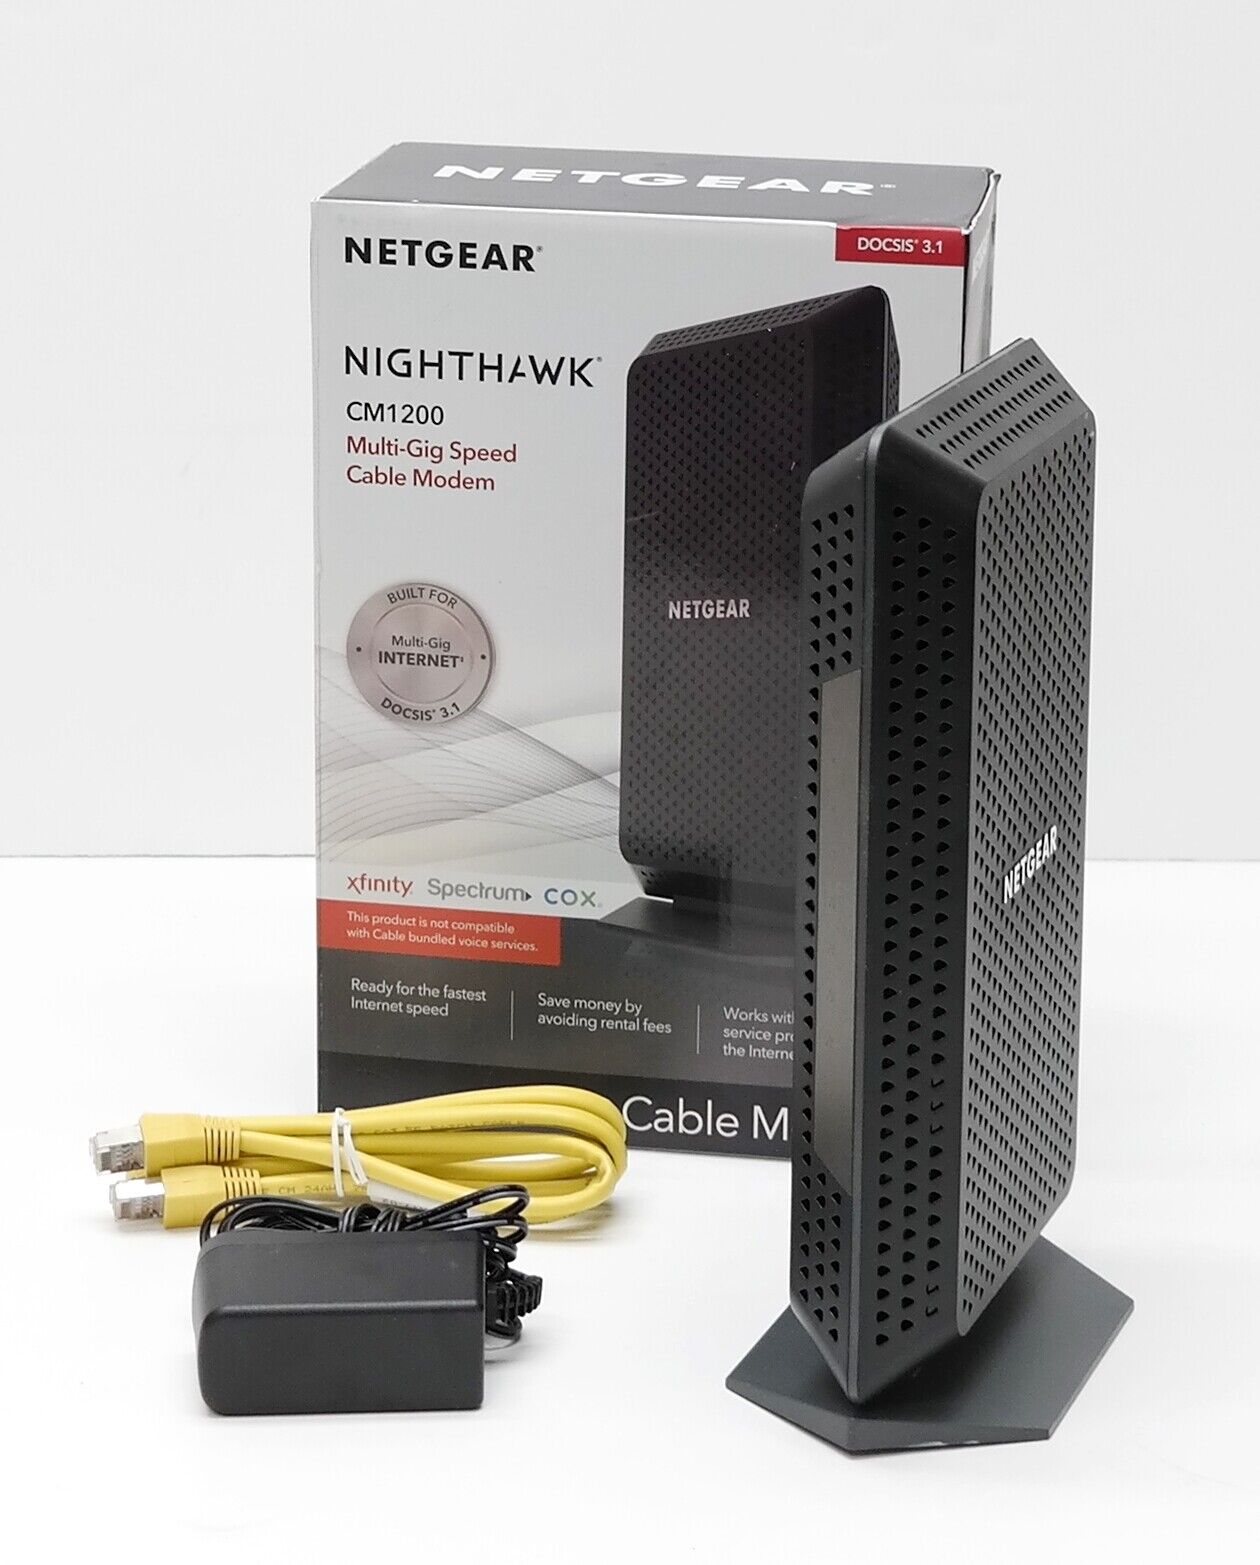 NETGEAR Nighthawk CM1200-100NAS DOCSIS 3.1 Cable Modem